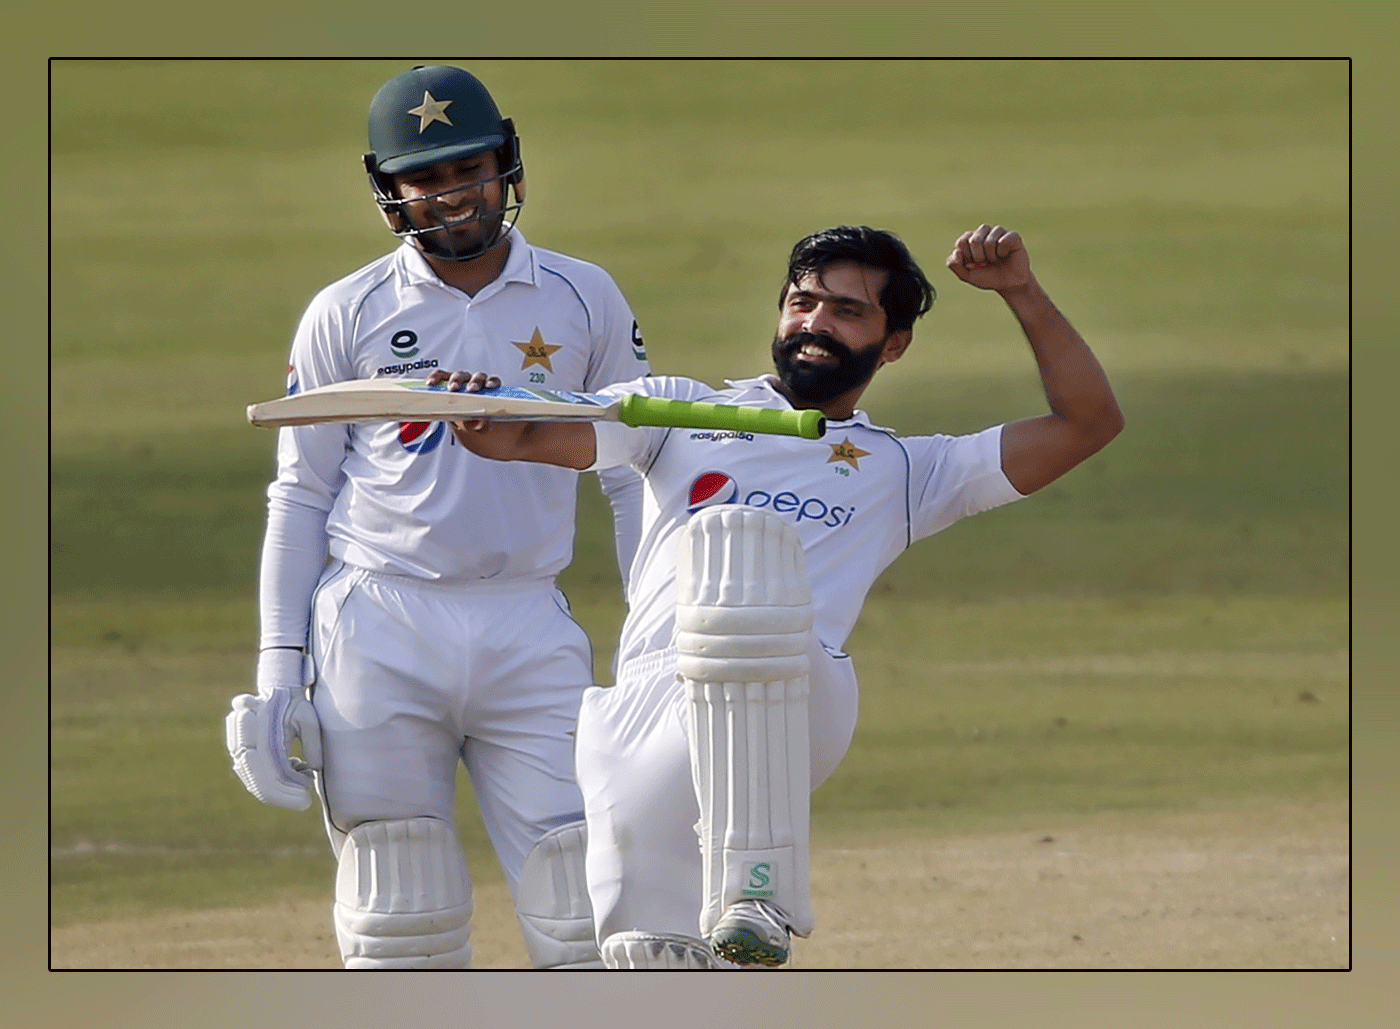 Karachi Test: Pakistan team scored 378 runs in the first innings